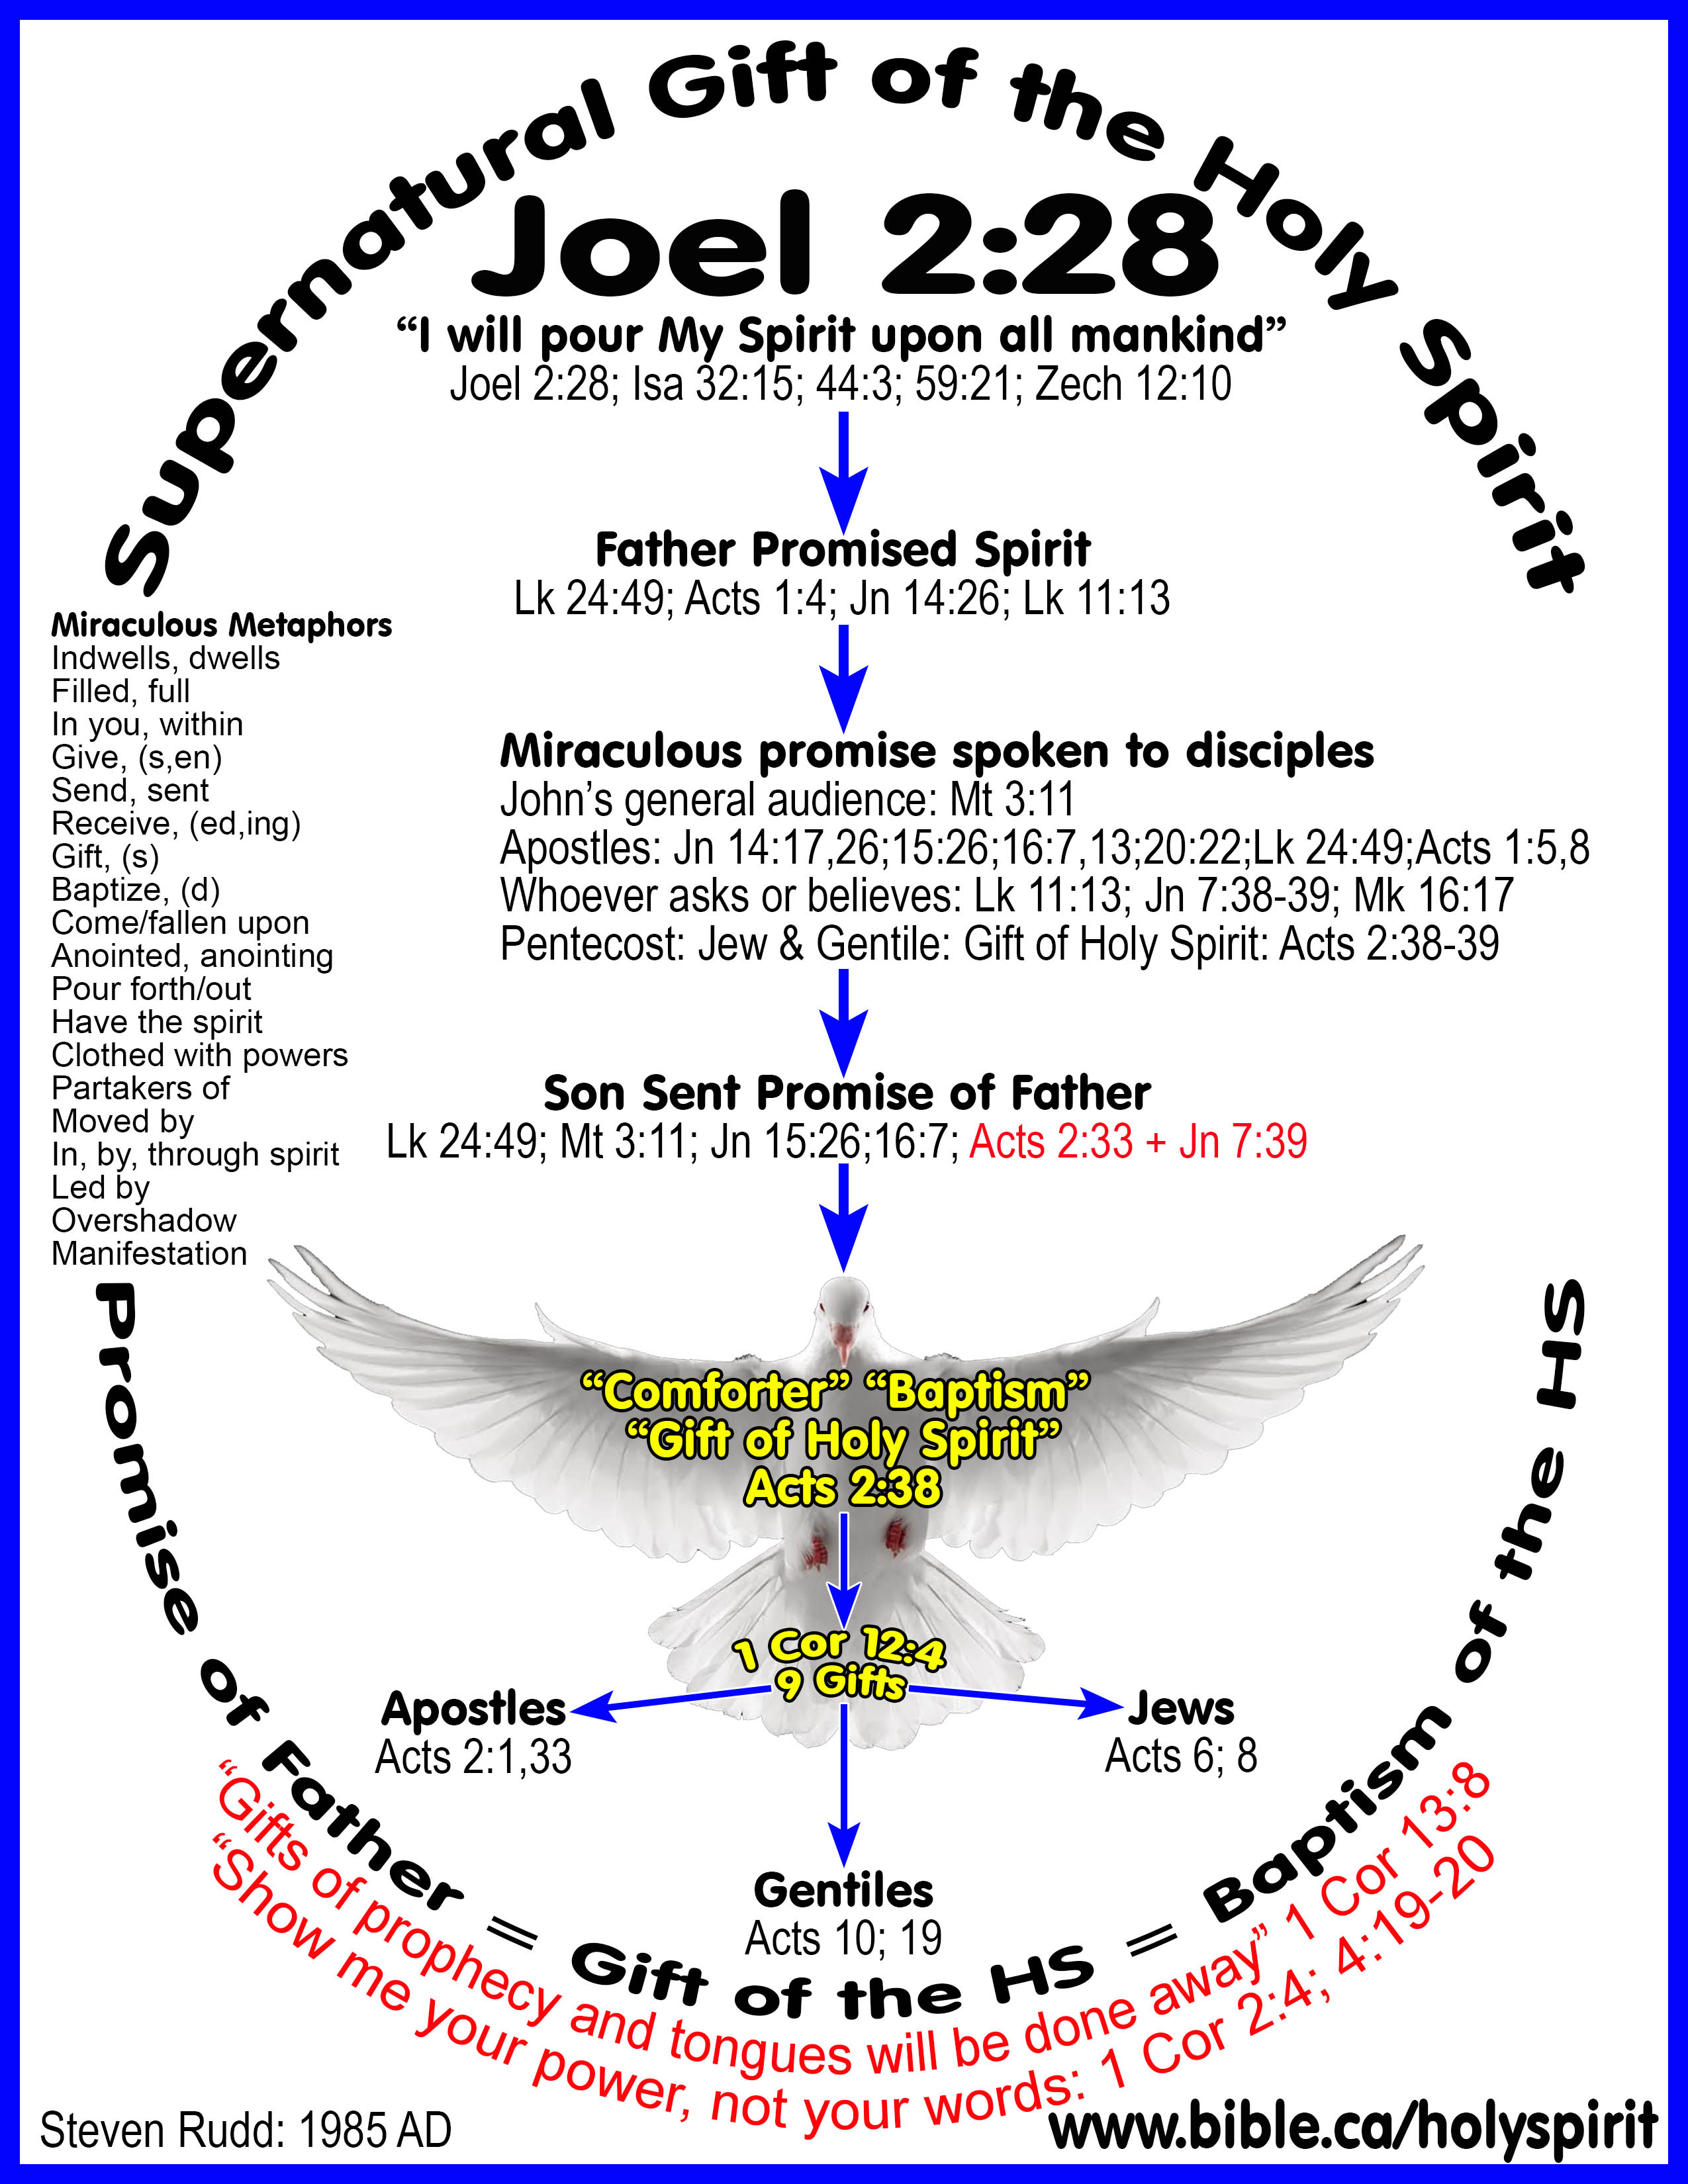 https://www.bible.ca/holyspirit/gift-of-the-Holy-Spirit-indwelling-baptism-promise-Father.jpg